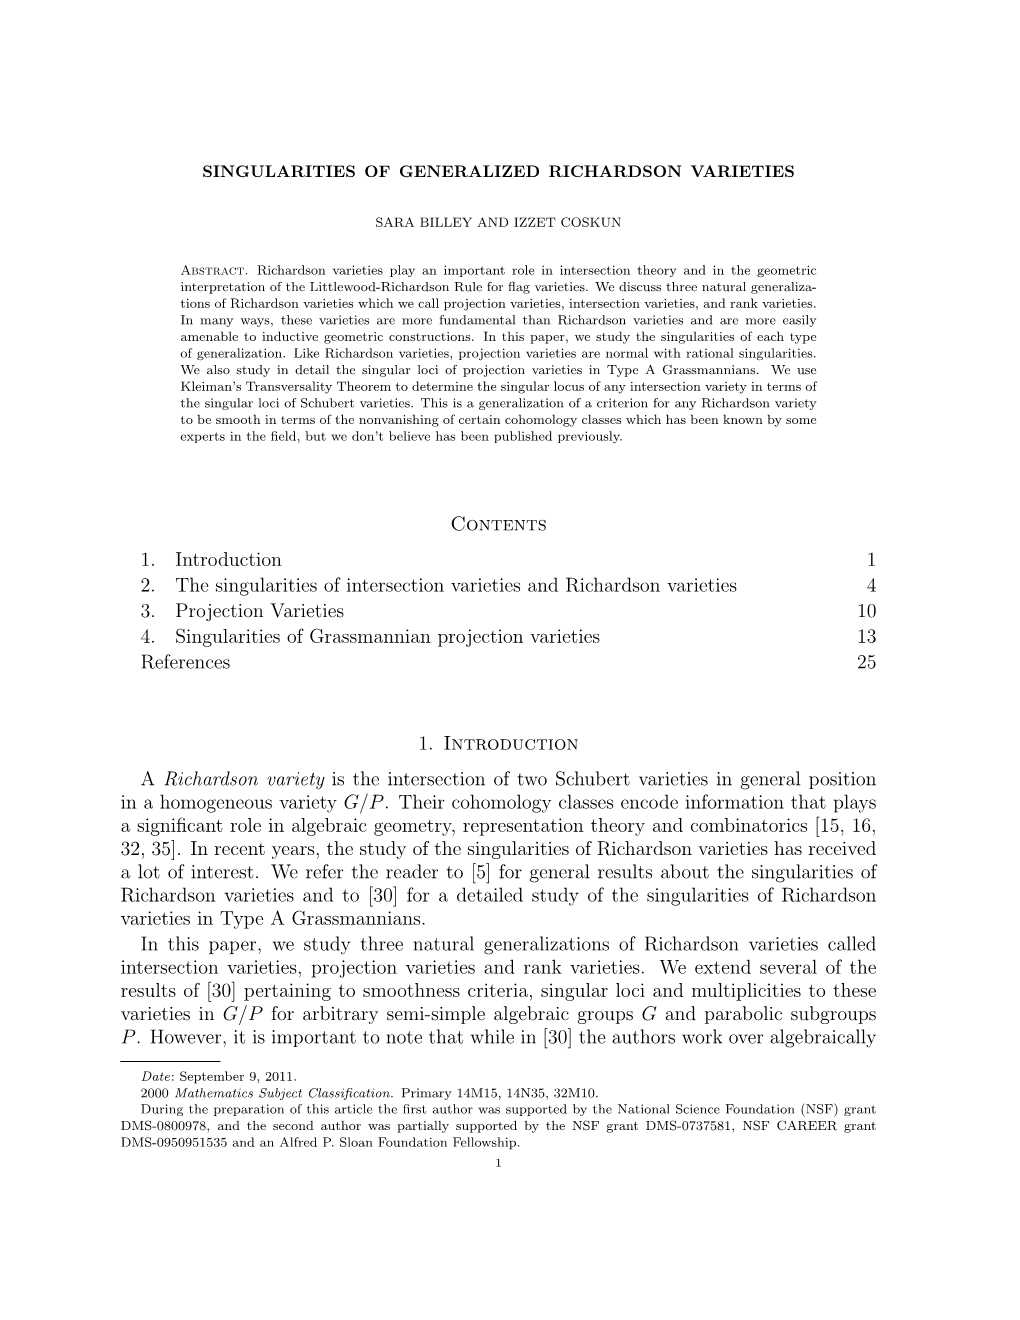 Singularities of Generalized Richardson Varieties